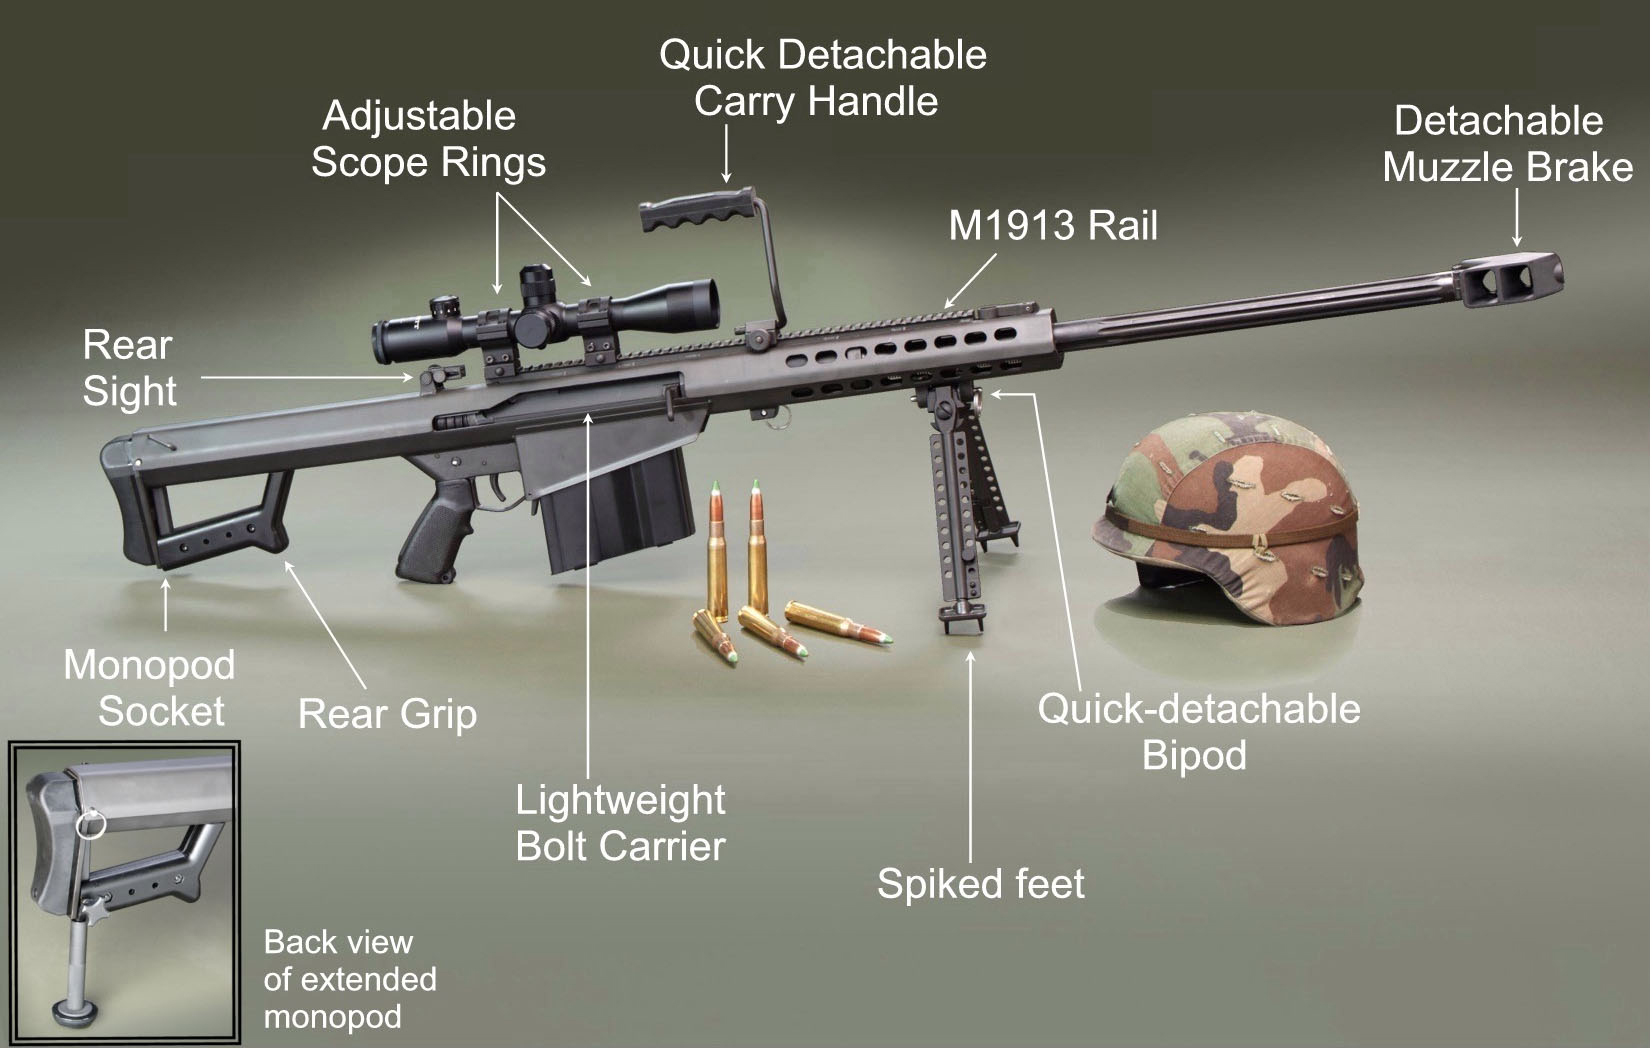 Barrett Xm107 50 Bmg Anti Material Sniper Rifle With 5 Raufoss Mk211 Saphei Rounds For Comparison Hive